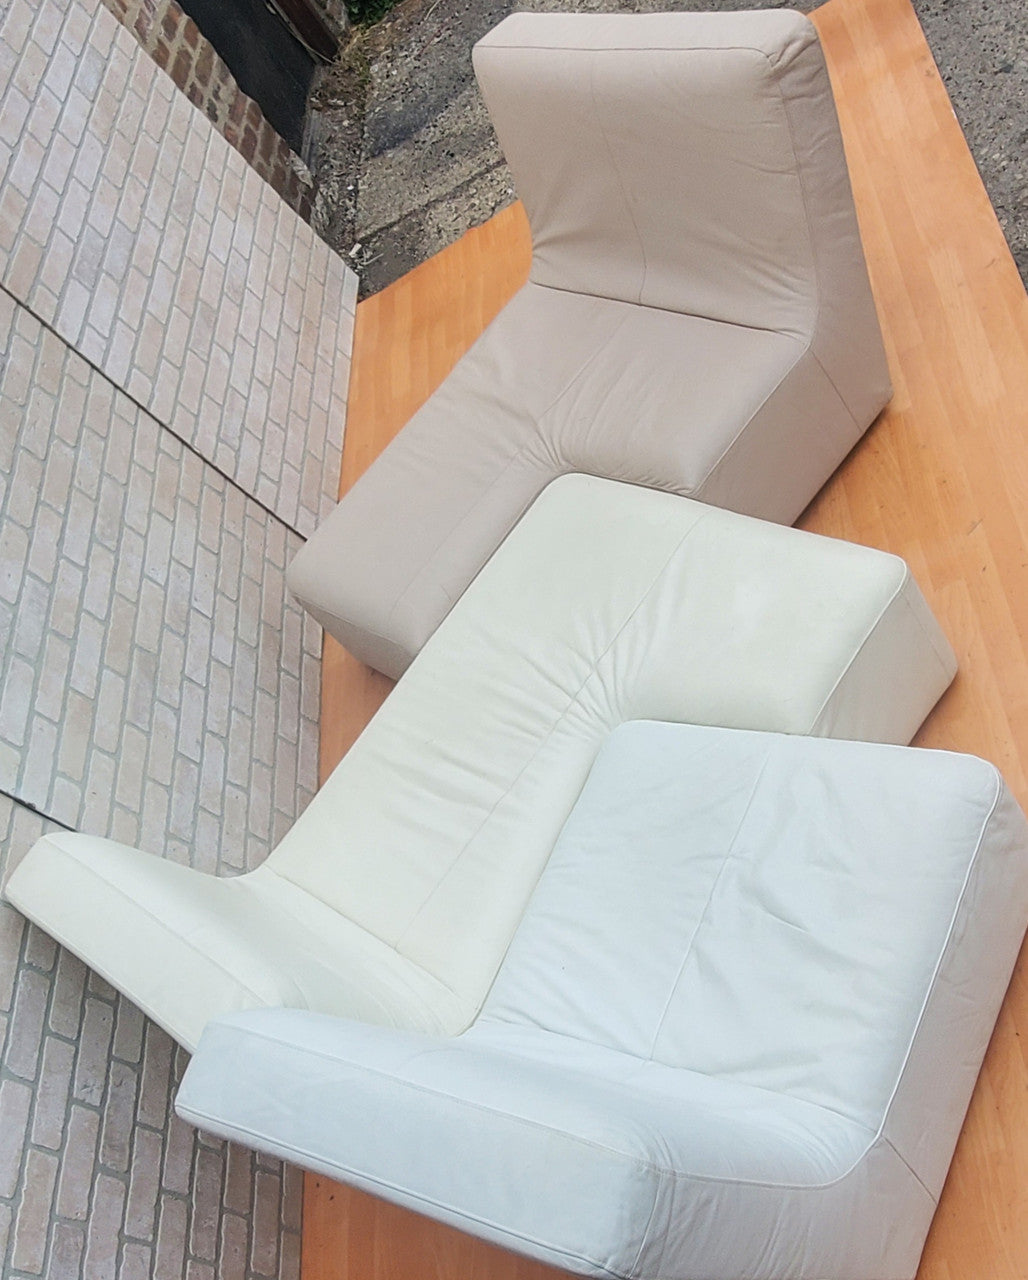 Mid Century Modern Confluences Sofa Designed by Philippe Nigro for Ligne Roset - 3 Piece Set